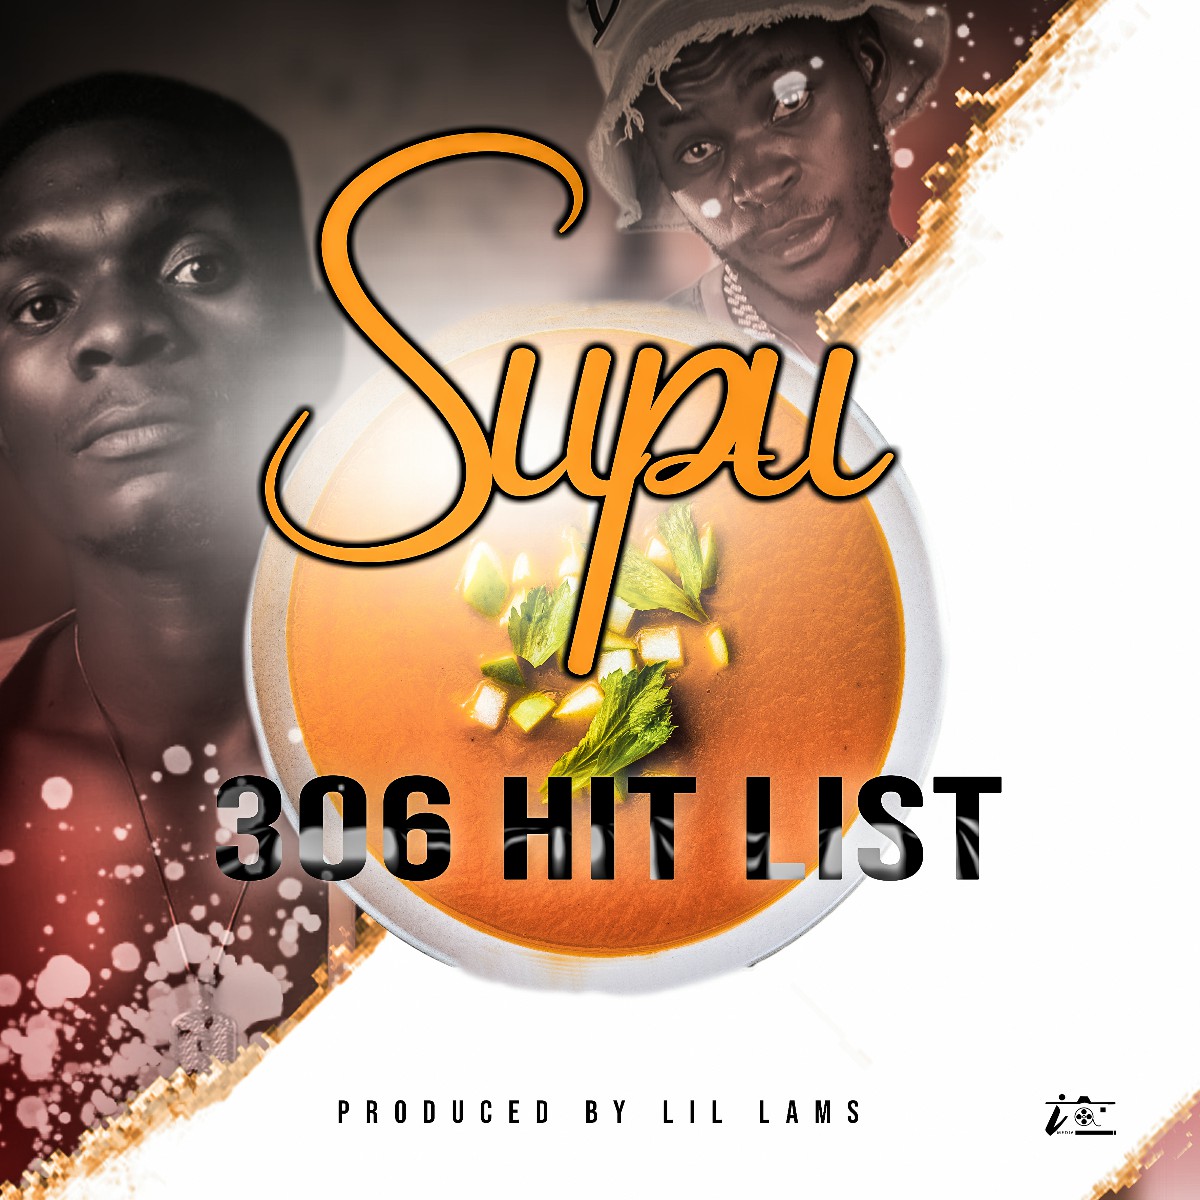 306 Hit List - Supu (Prod. Lil Lams)